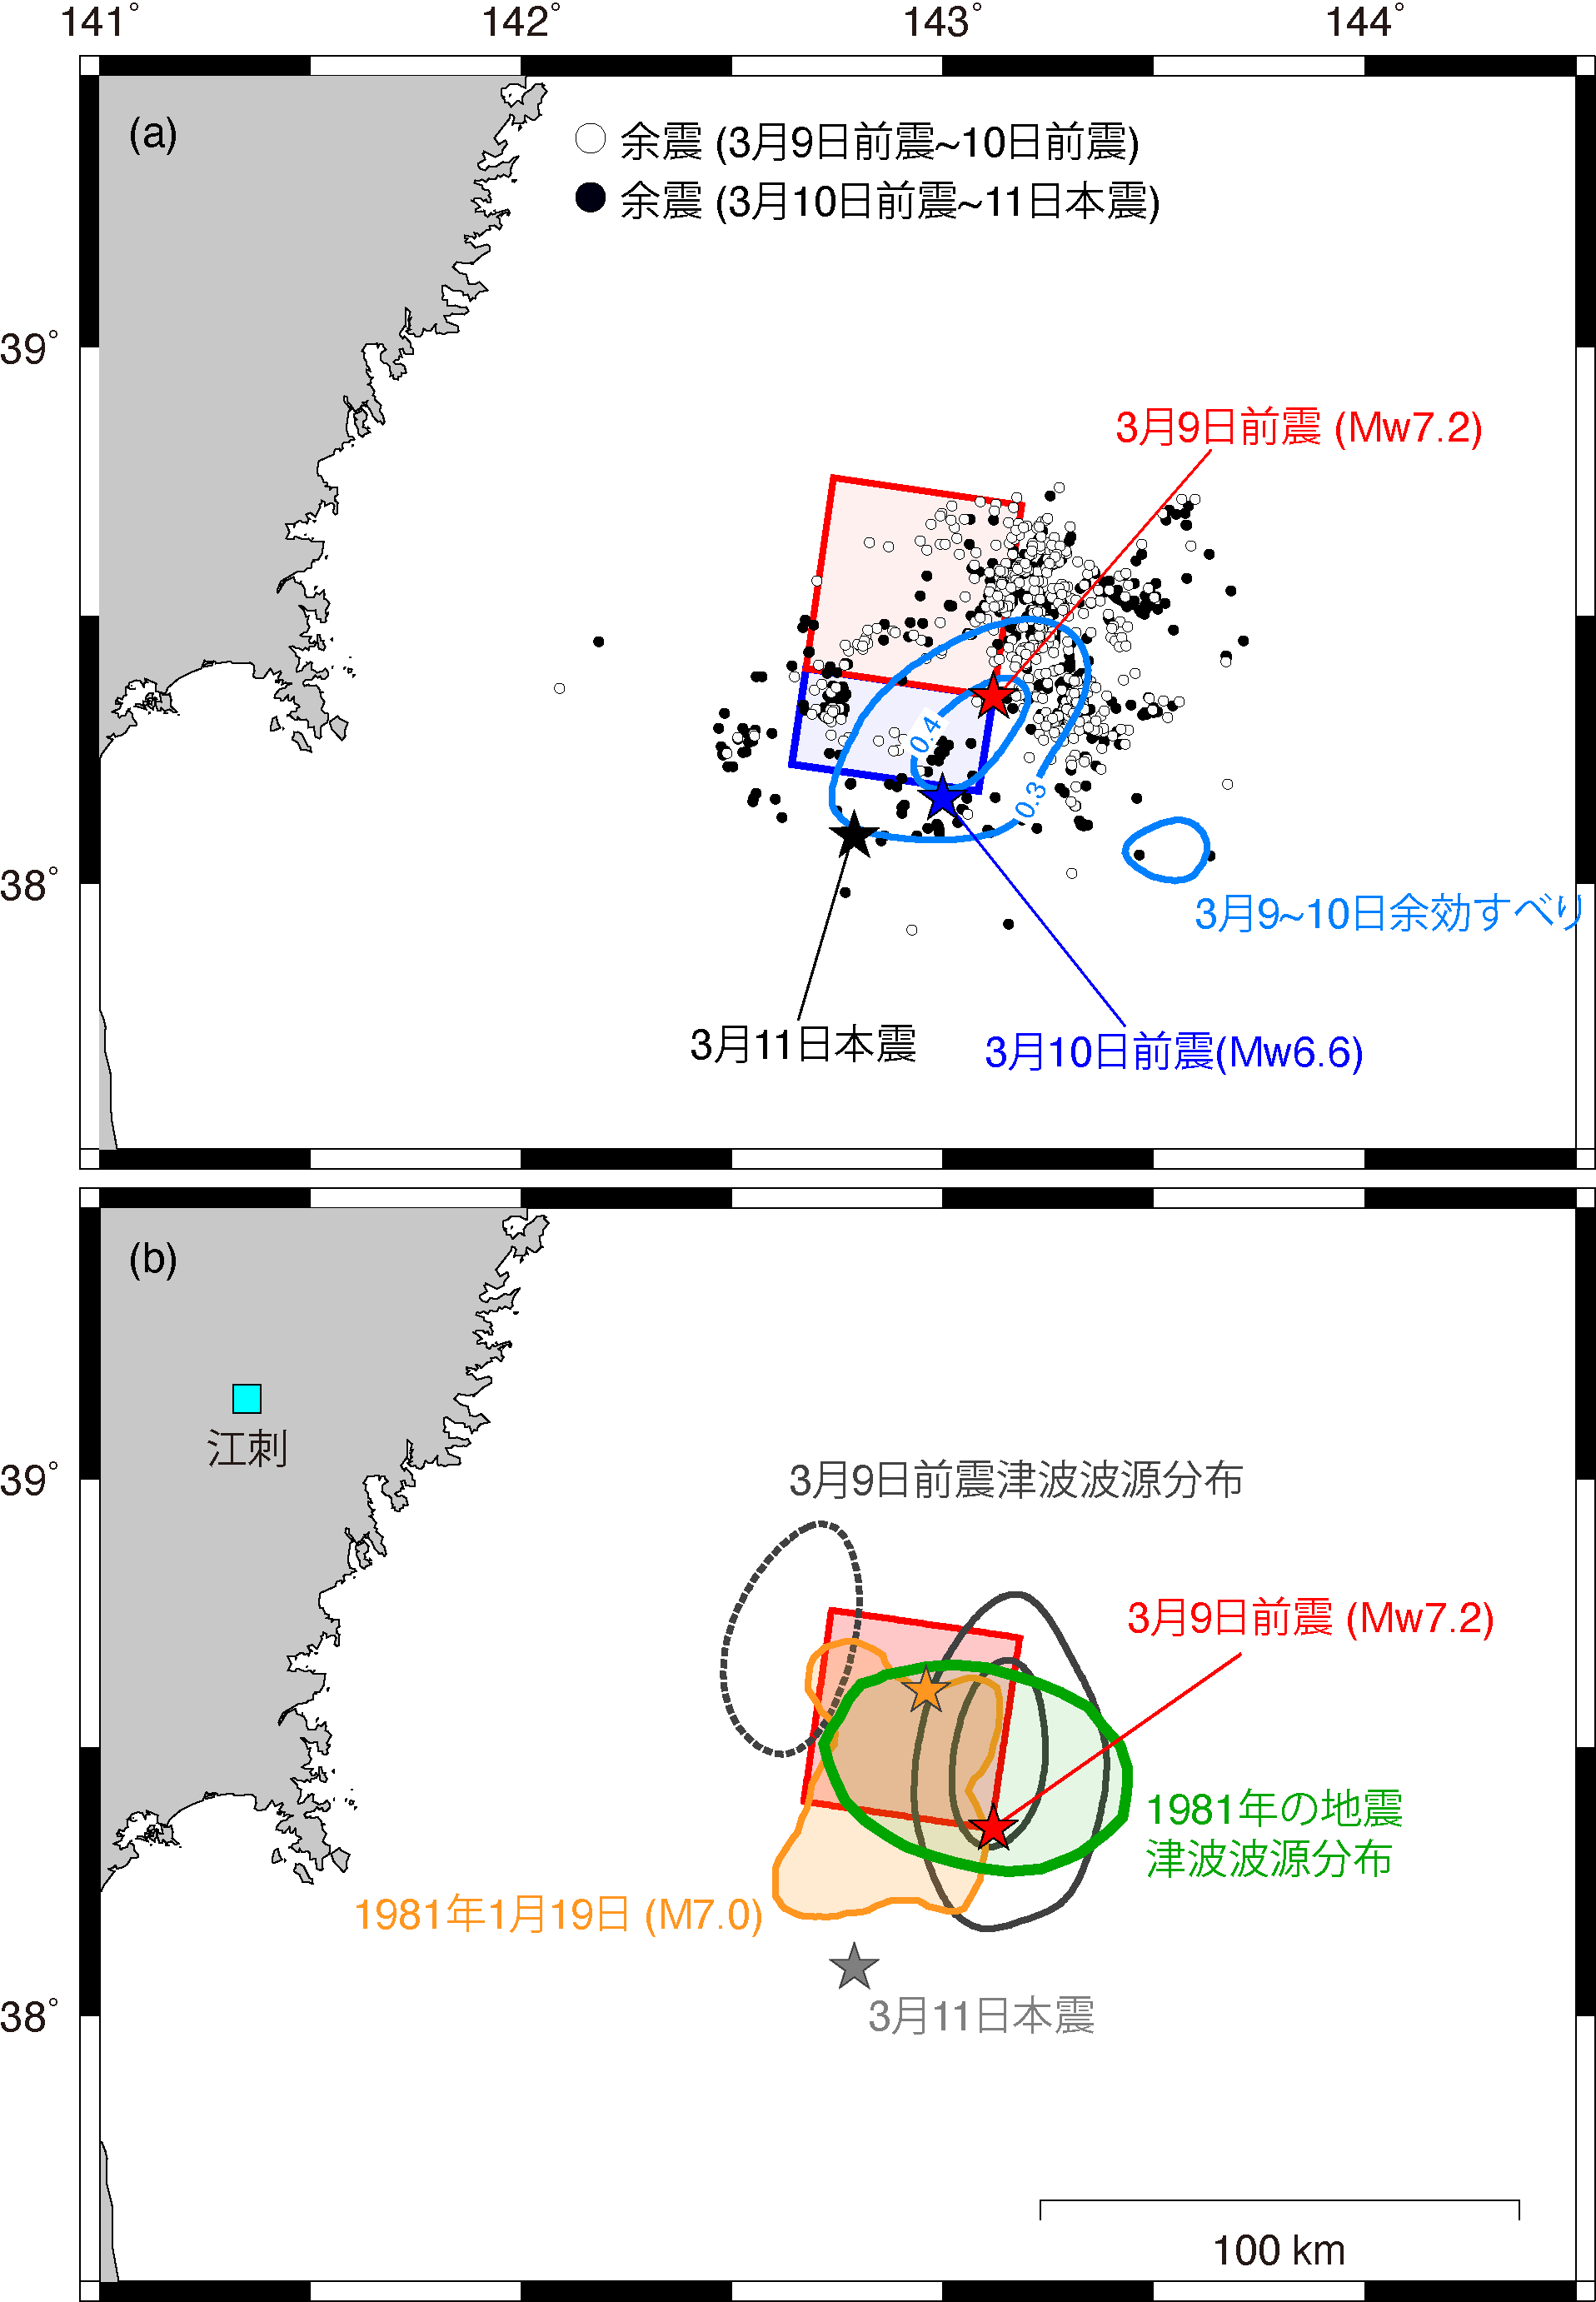 (a) 本研究で推定した3月9日前震 (赤矩形) および10日前震 (青) の主すべり域と， 9日の前震の余効すべり分布 (青コンター線, Ohta et al. 2012)．白丸は9日の前震から10日の前震#2まで，黒丸は10日の前震から本震までの間に発生した余震の震央を示す．これらの余震の位置はAtnafu (2016, 東北大学修士論文) により海底地震計を用いて再決定された．(b) 9日の前震と1981年のM7.0の地震の主すべり域と津波波源域の比較．赤矩形は本研究で推定した前震の主すべり域，オレンジ色の領域は1981年の地震のすべり域 (Yamanaka and Kikuchi 2004) を示す．黒いコンター線は前震による津波波源分布を，緑色の領域はHatori (1981) により推定された1981年の地震の押し波波源域を表す．赤・灰色の星は前震および本震の震央 (Suzuki et al. 2012) を，黄色の星は気象庁により決定された1981年の地震の震央を表す．青い四角は1981年の地震において余効変動が観測された江刺傾斜観測点を表す．